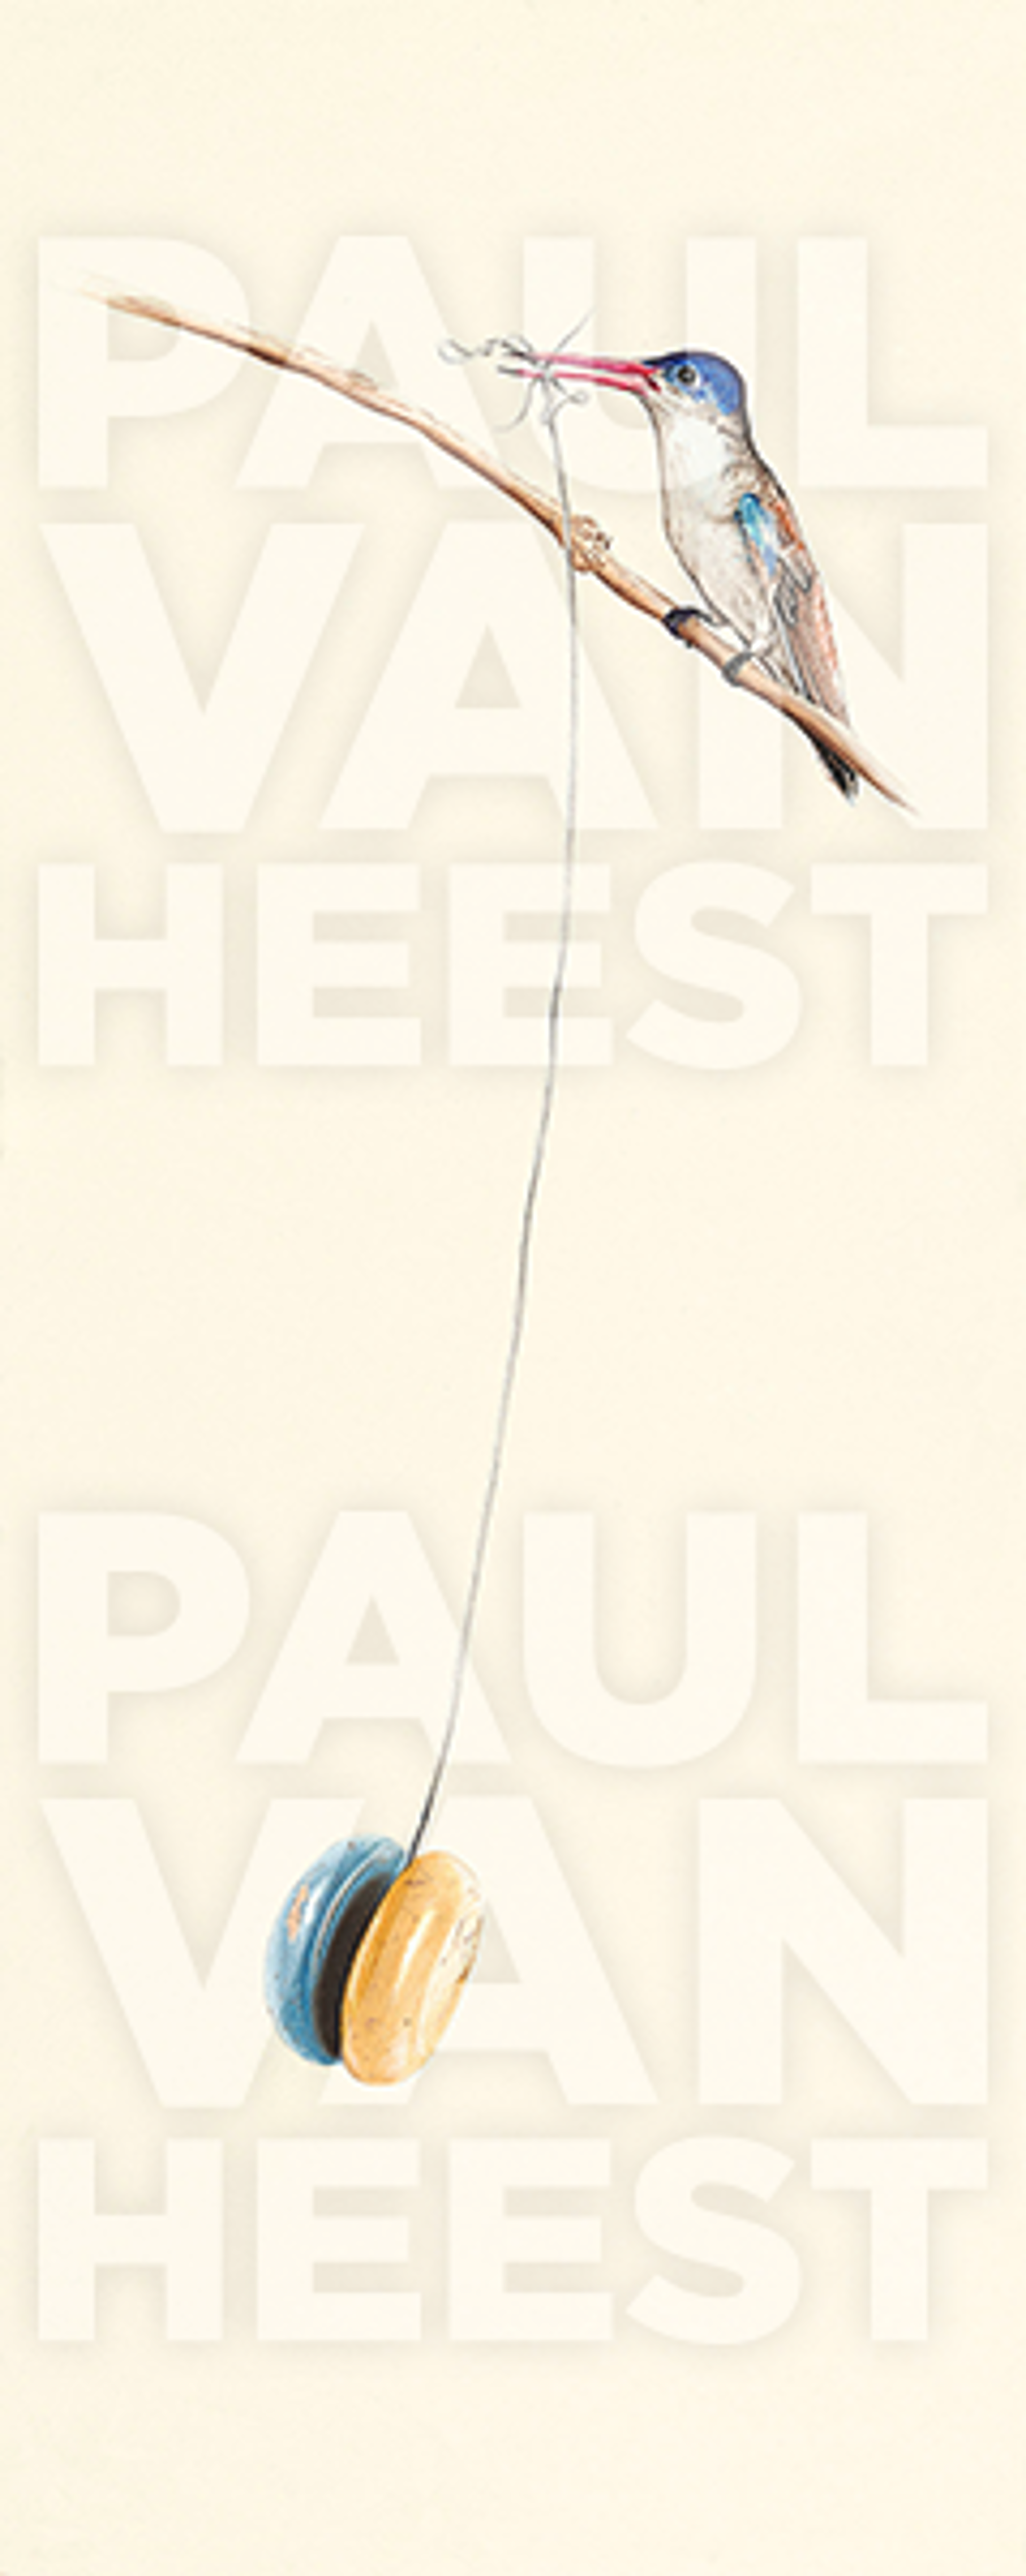 Hummingbird with YoYo by Paul Van Heest